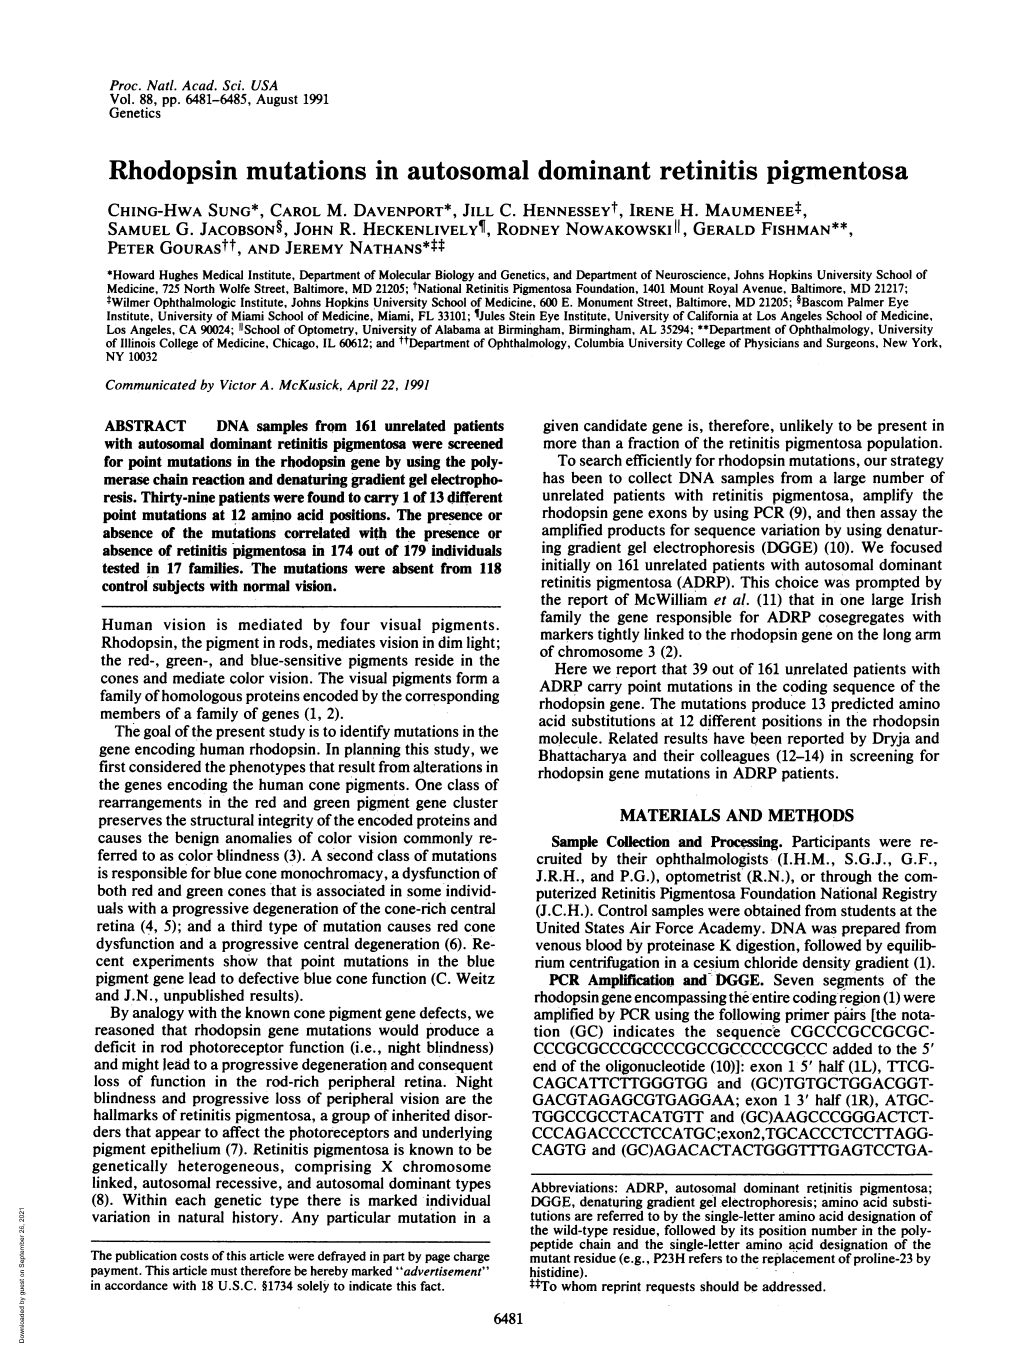 Rhodopsin Mutations in Autosomal Dominant Retinitis Pigmentosa CHING-HWA SUNG*, CAROL M